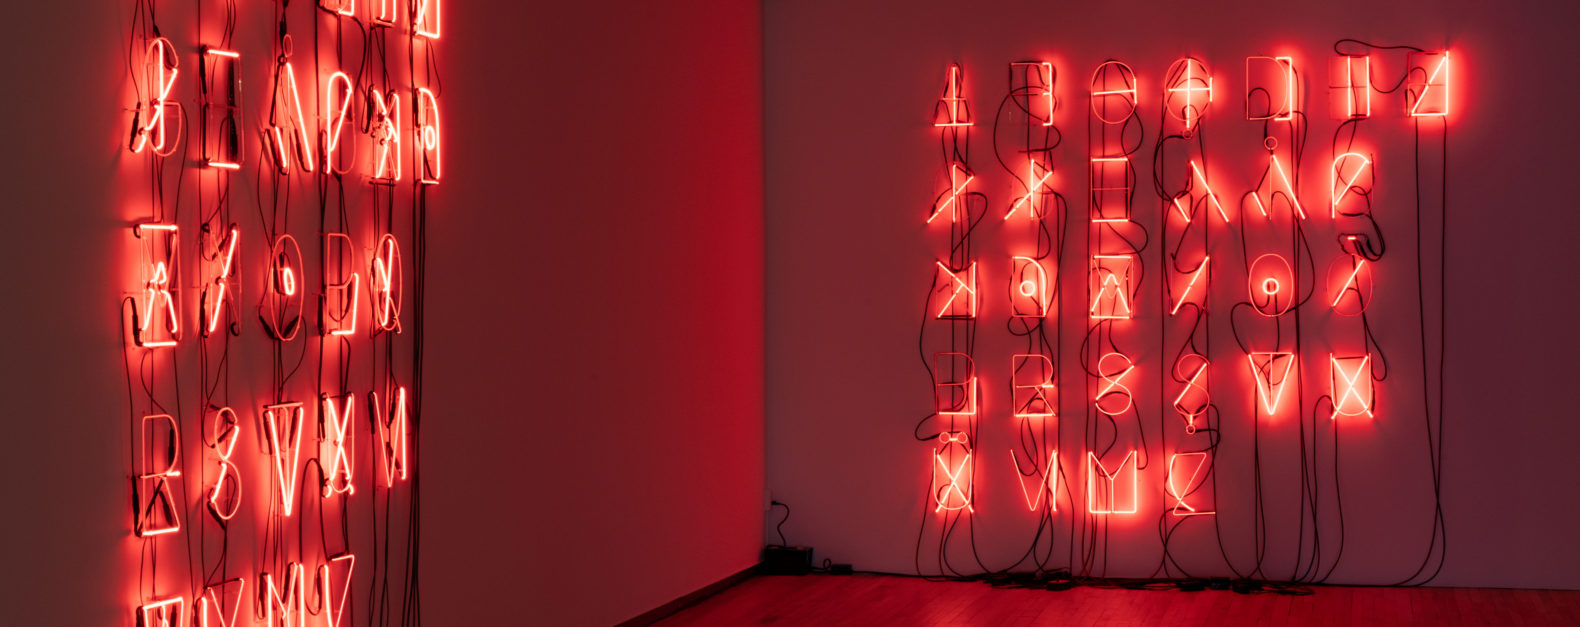 Feature image for Pop-Up Talk with Aslı Çavuşoğlu, Çavuşoğlu's installation ANNEX red neon lettering